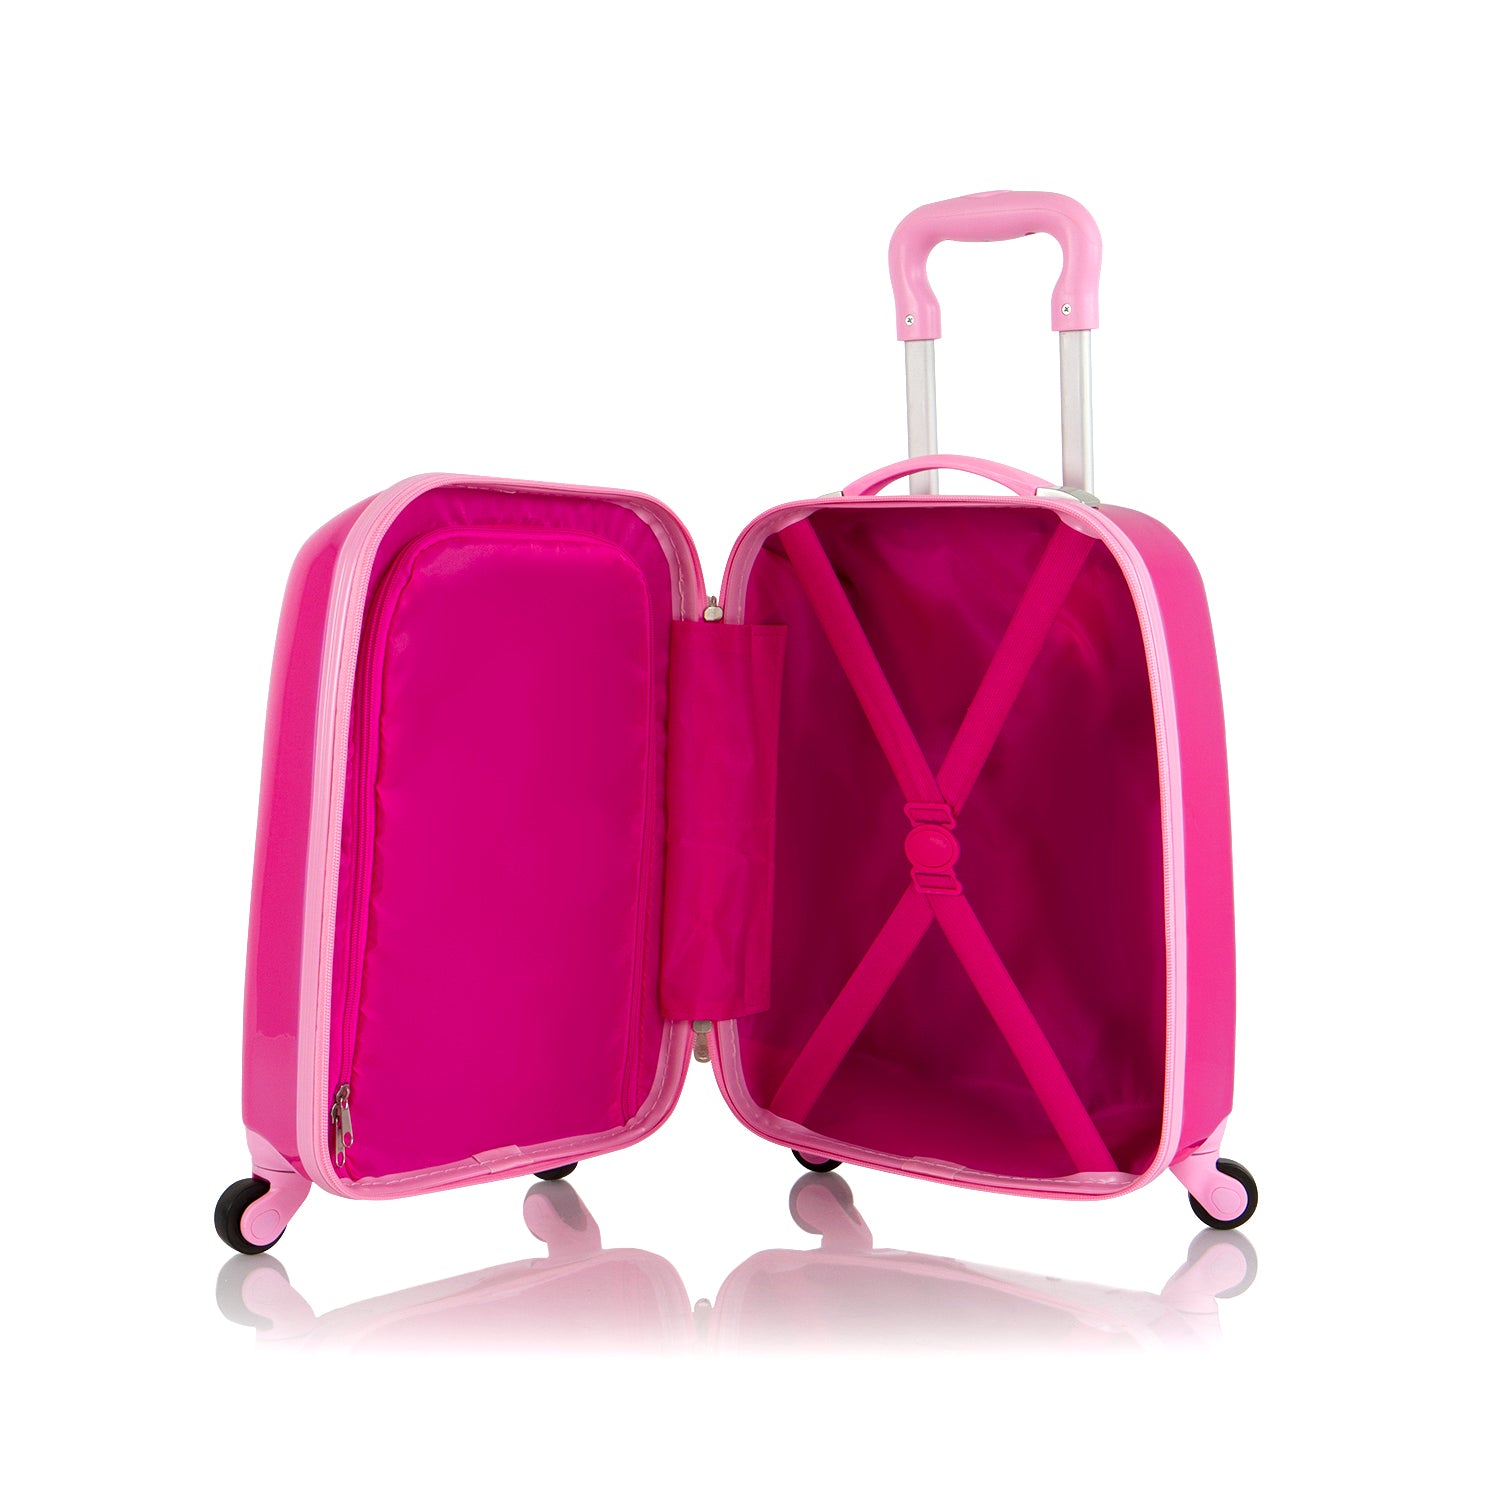 Kids Fashion Spinner Luggage - Unicorn | Kids Carry-on Luggage